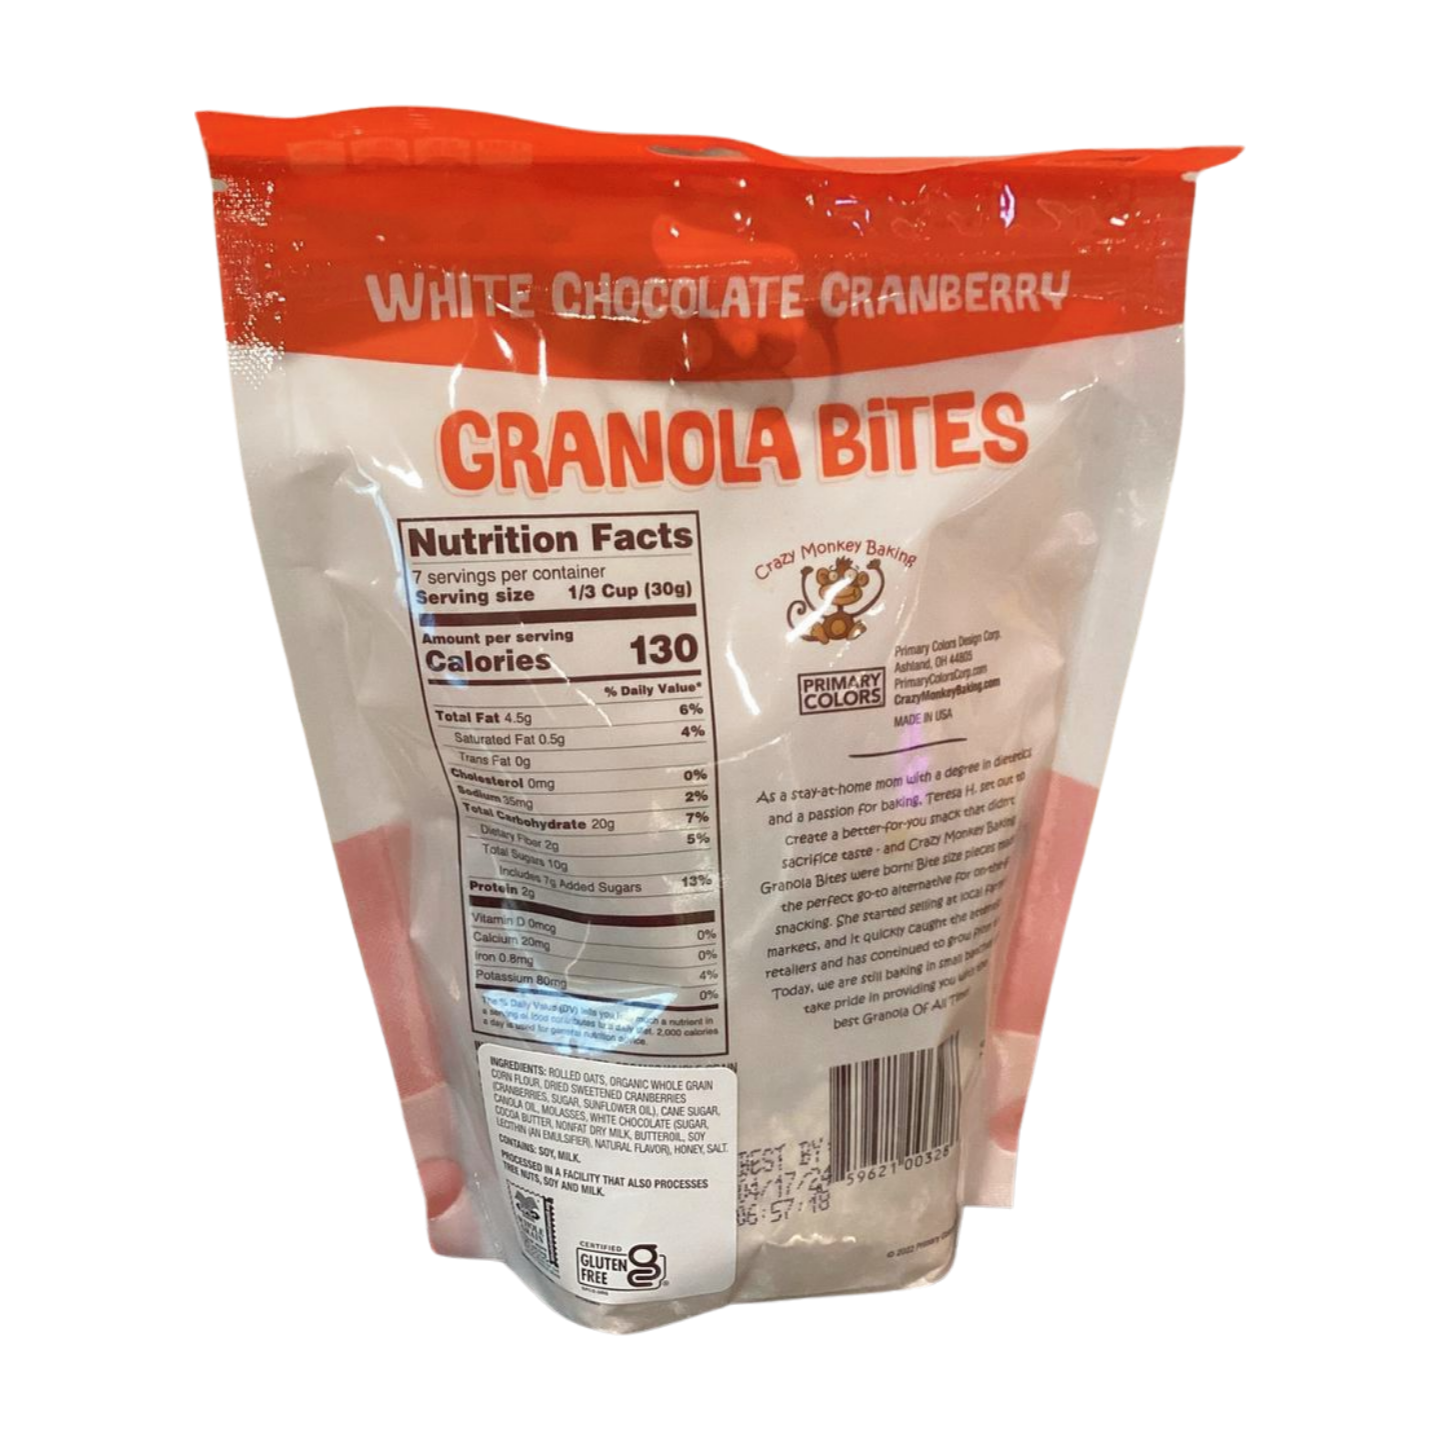 White Chocolate Cranberry Granola Bites